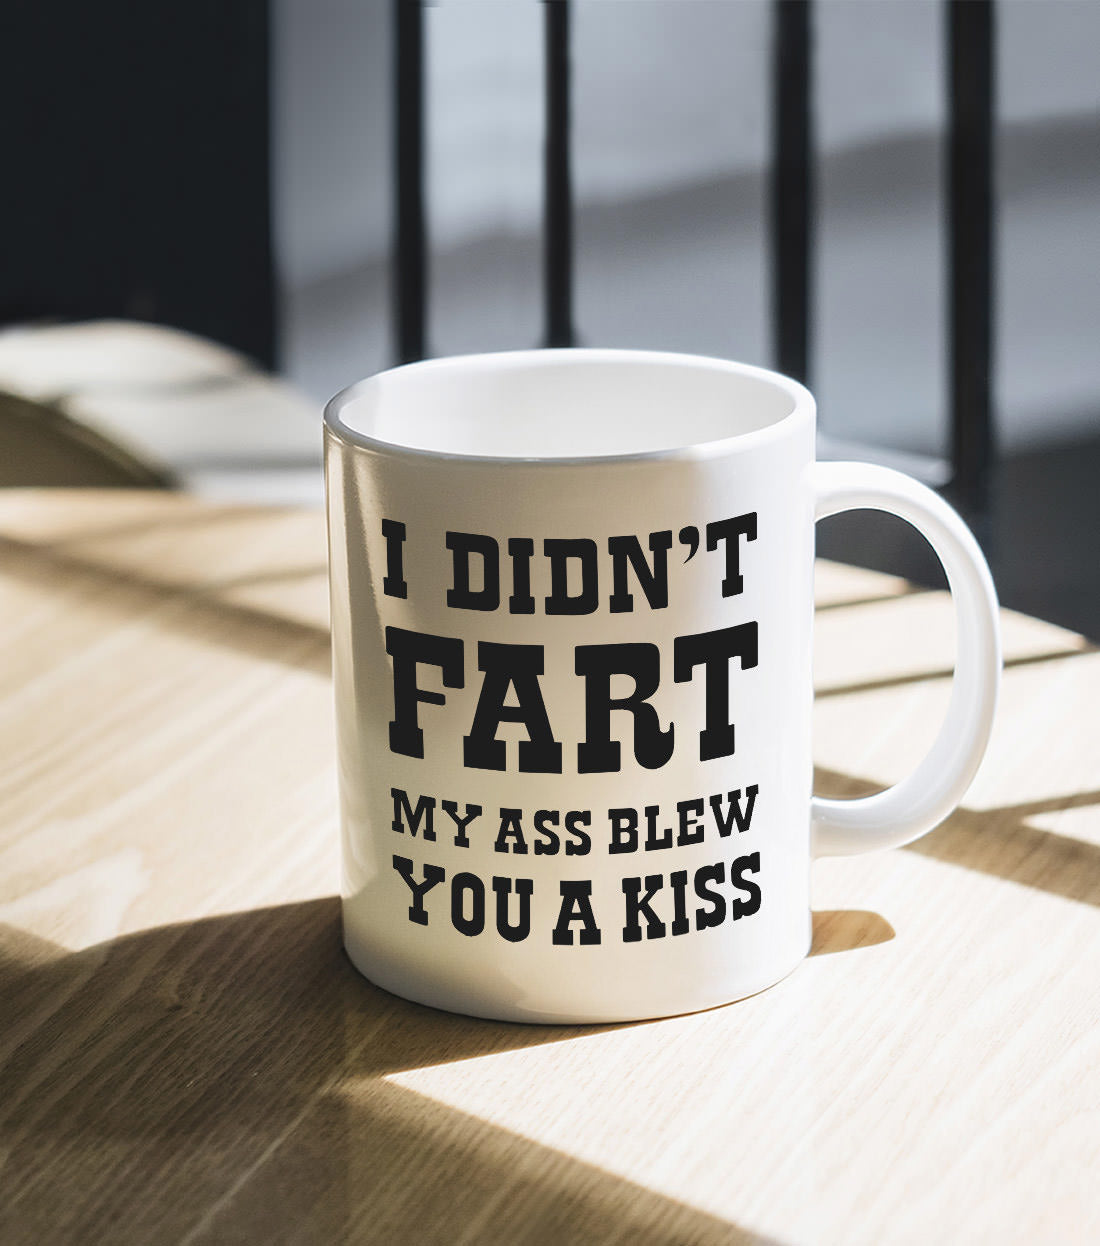 I Didn't Fart My Ass Blew You a Kiss Funny Coffee Mug - White 2